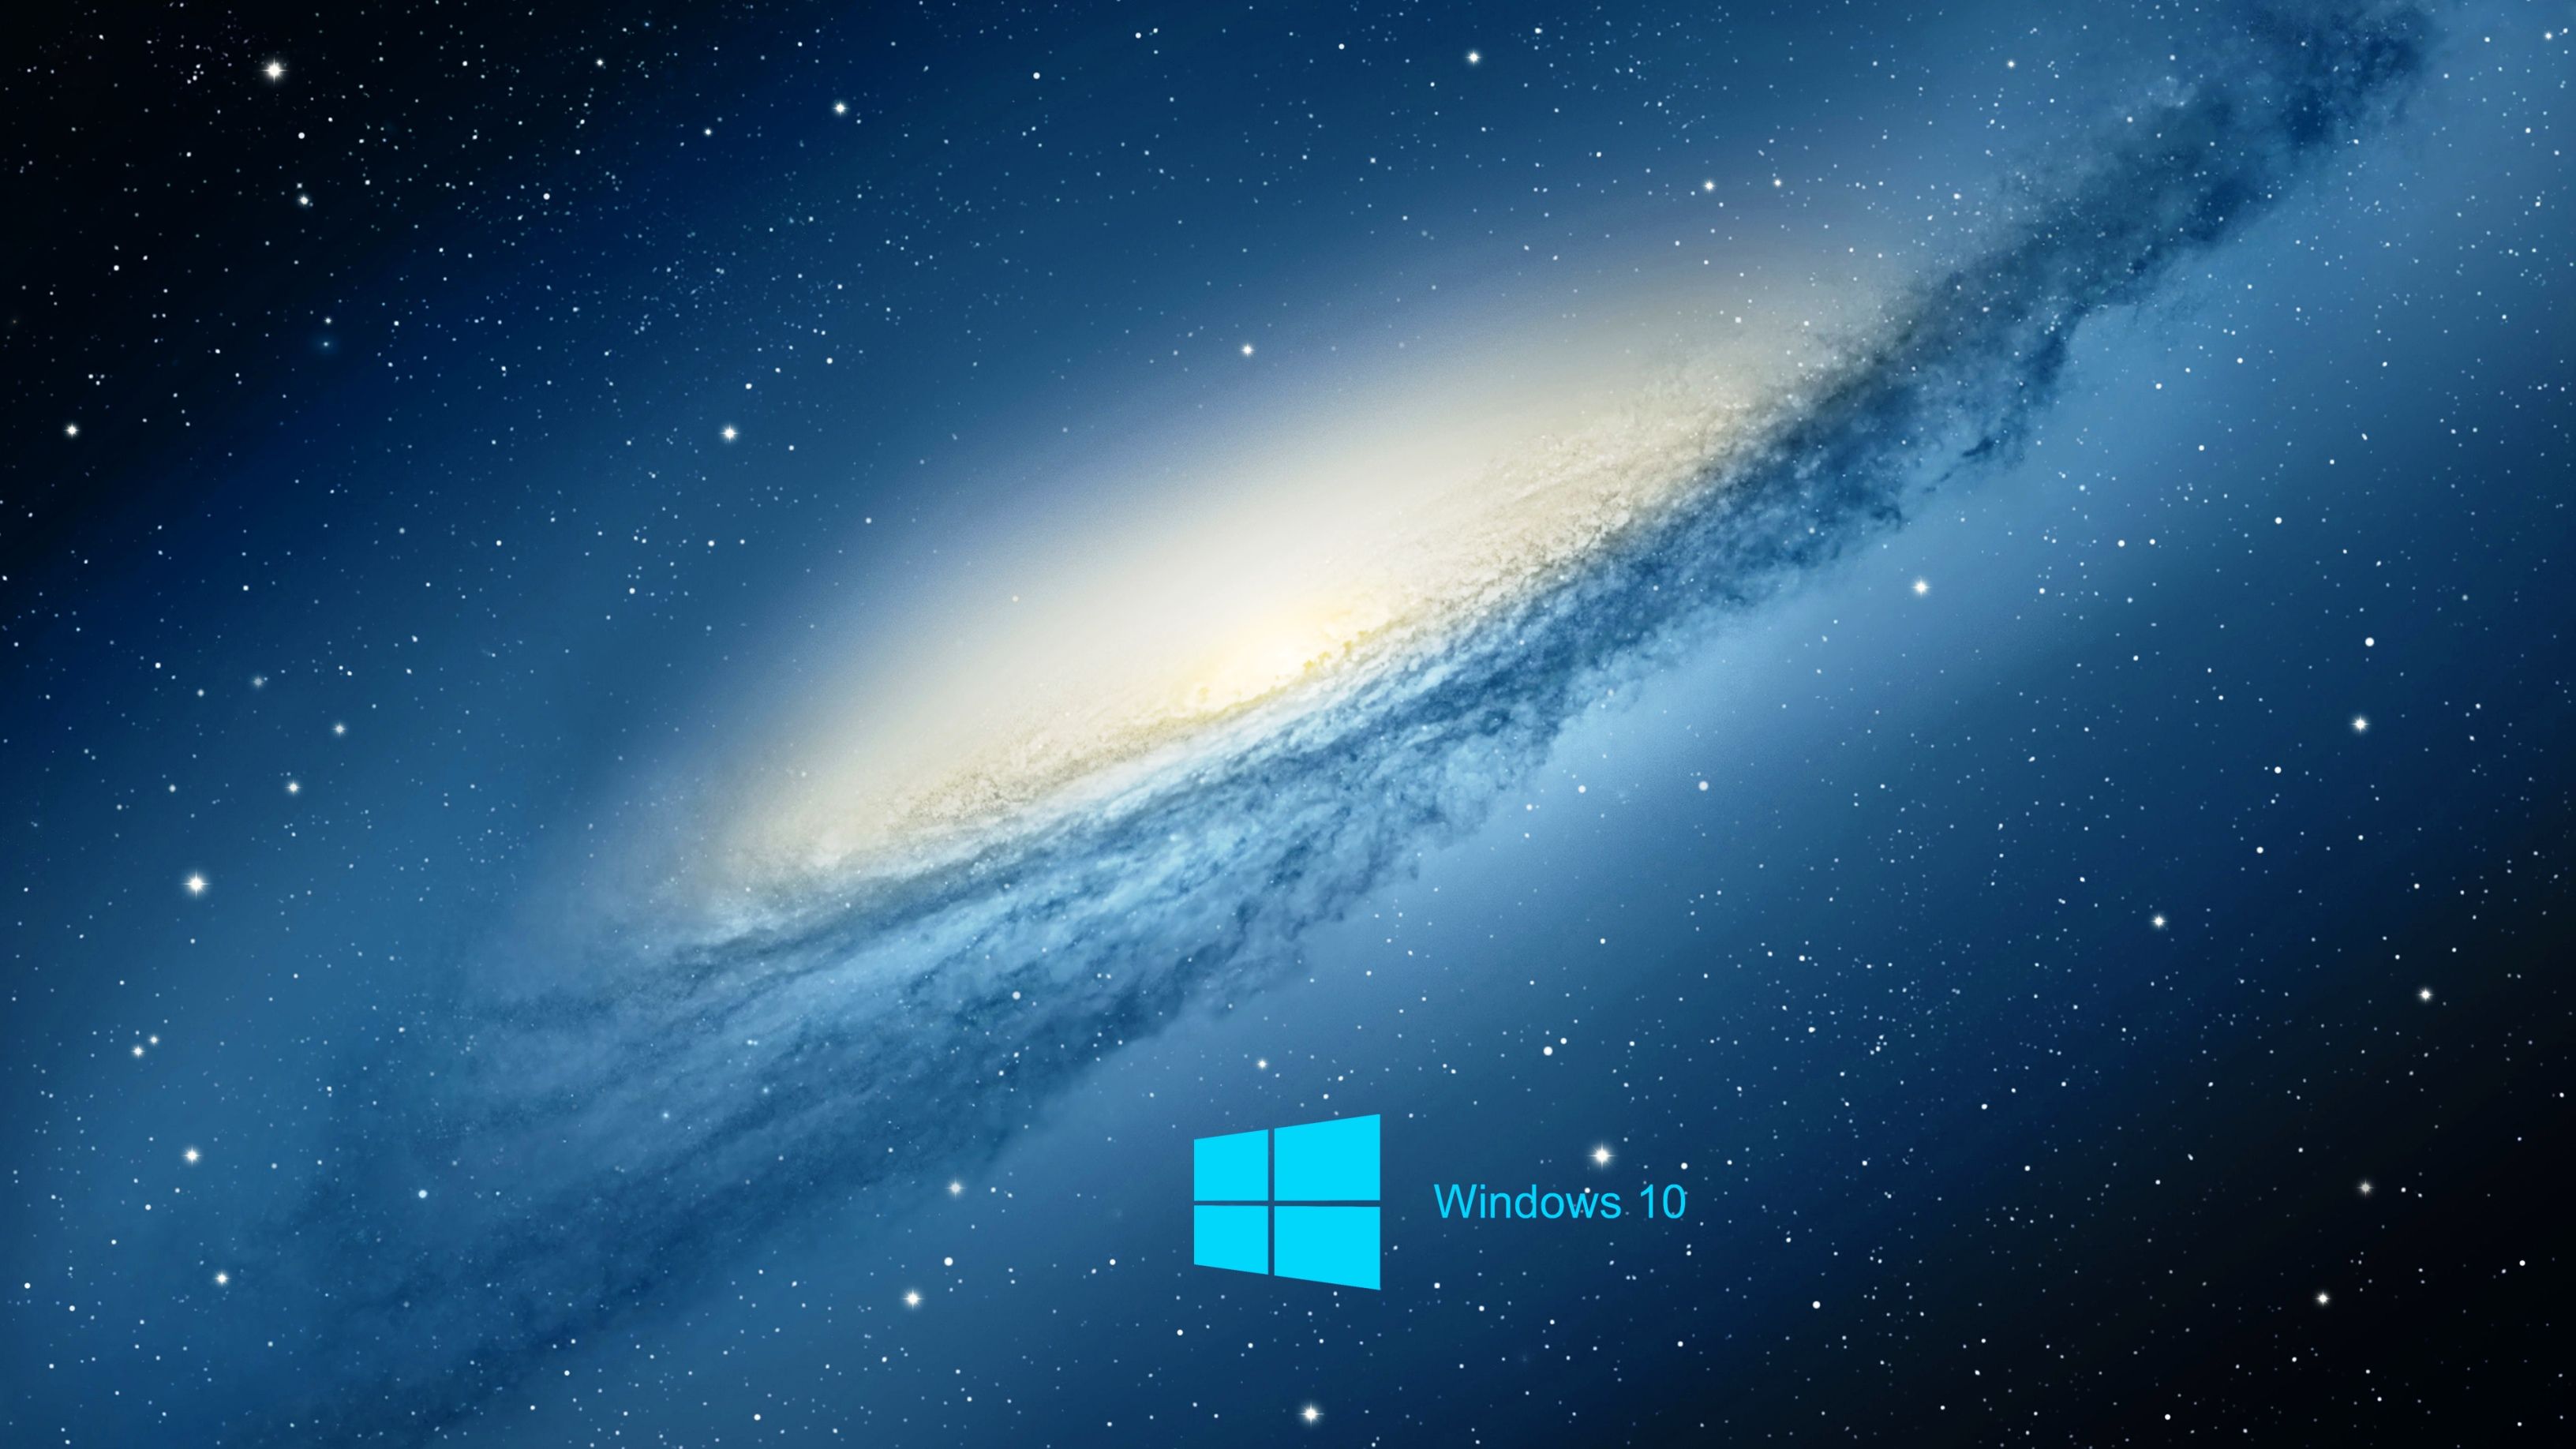 Windows 10 Ultra HD Wallpaper. Windows Attractive wallpaper, Cool desktop